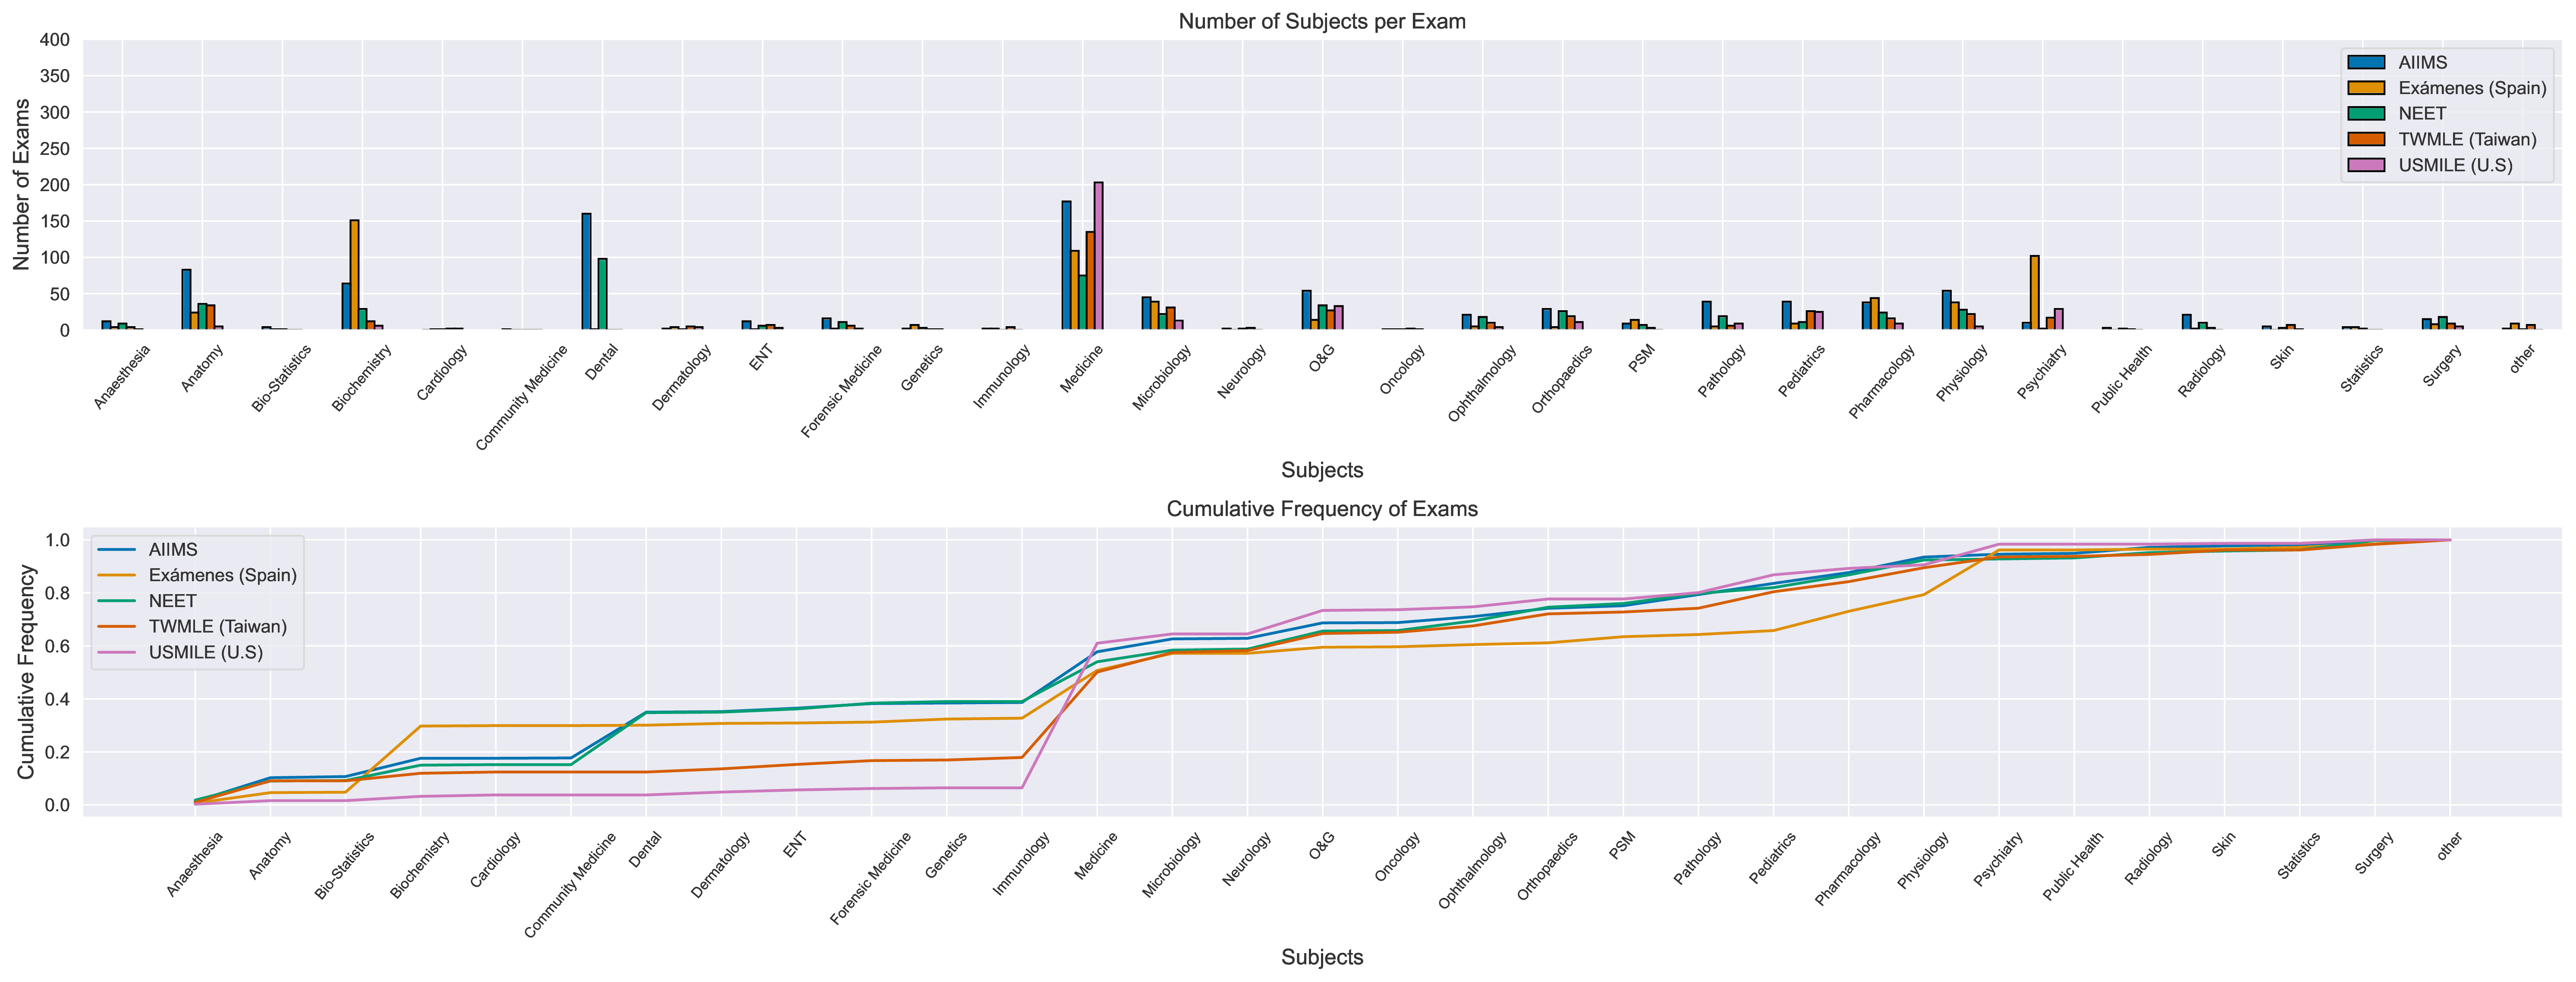 Distribution of subjects count per exam in Med-HALT dataset